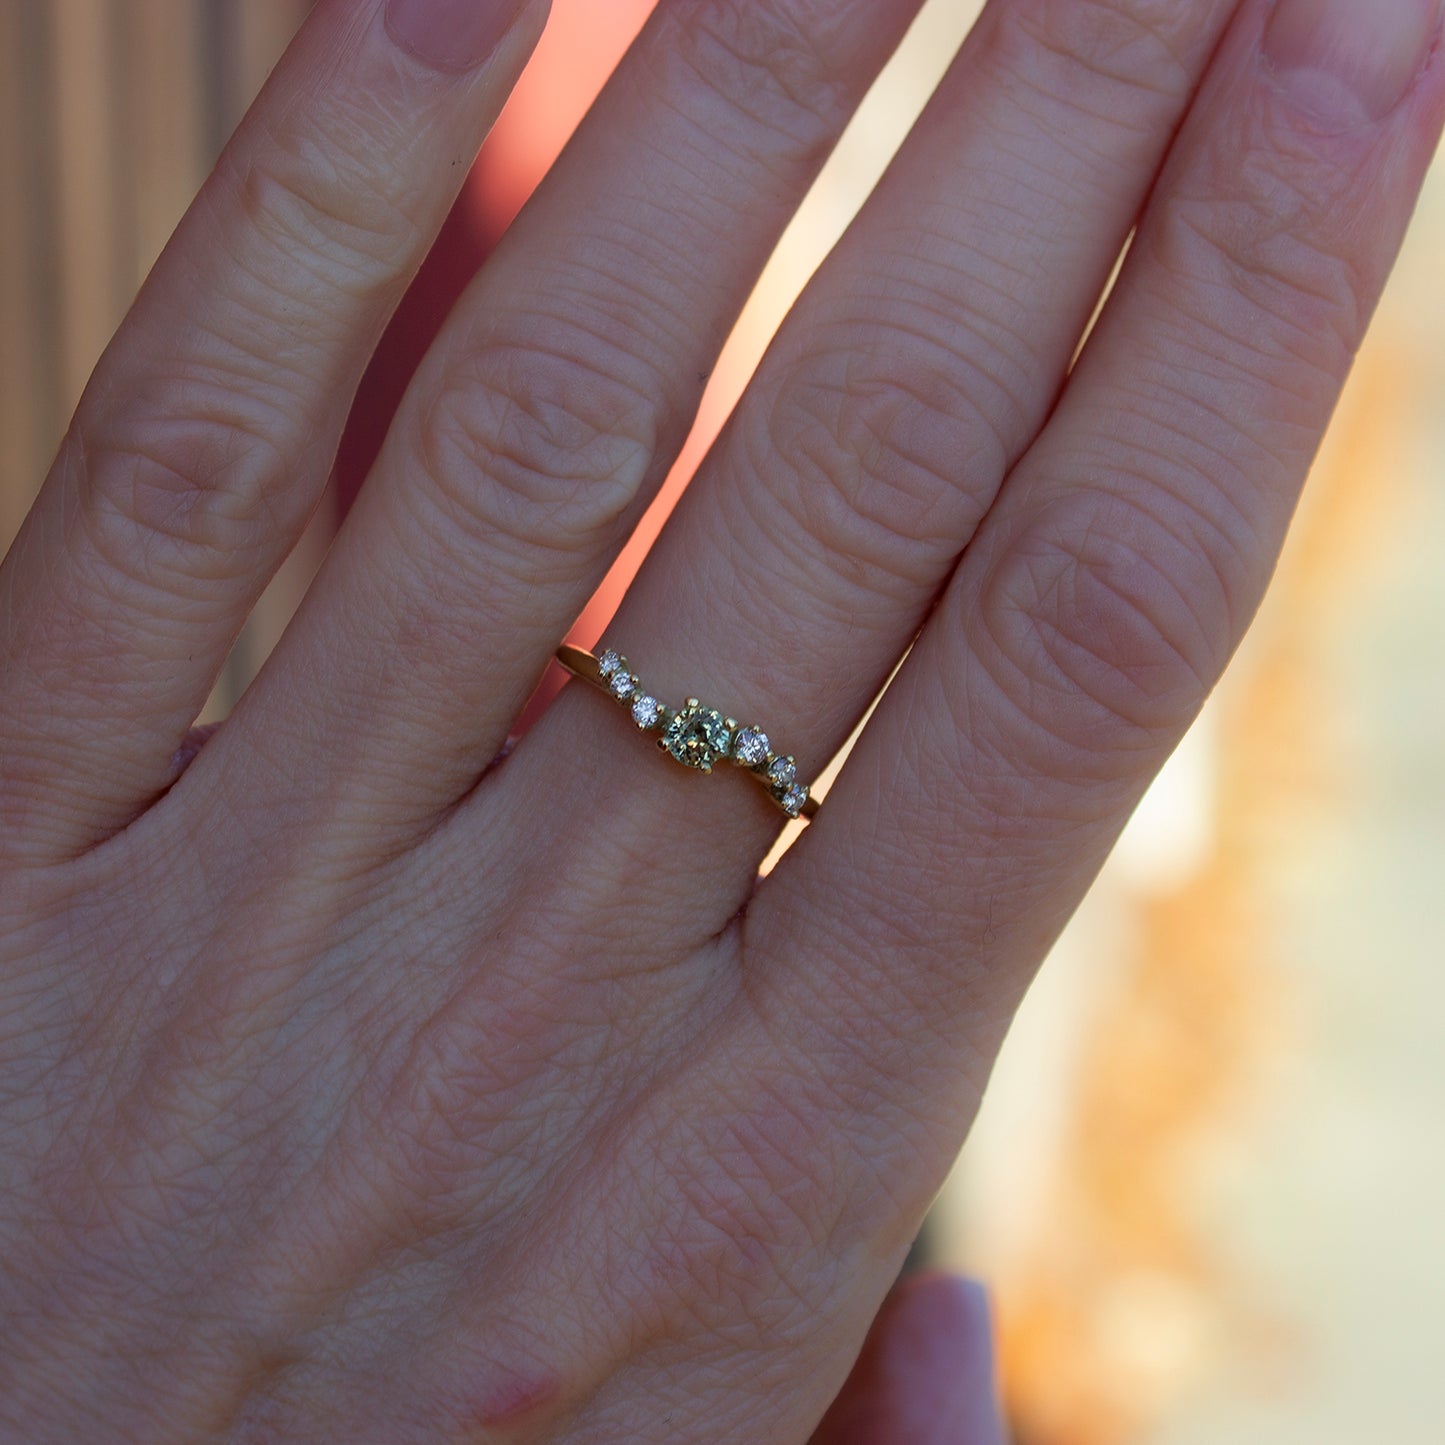 Namika Ring - Green Sapphire And White Diamonds